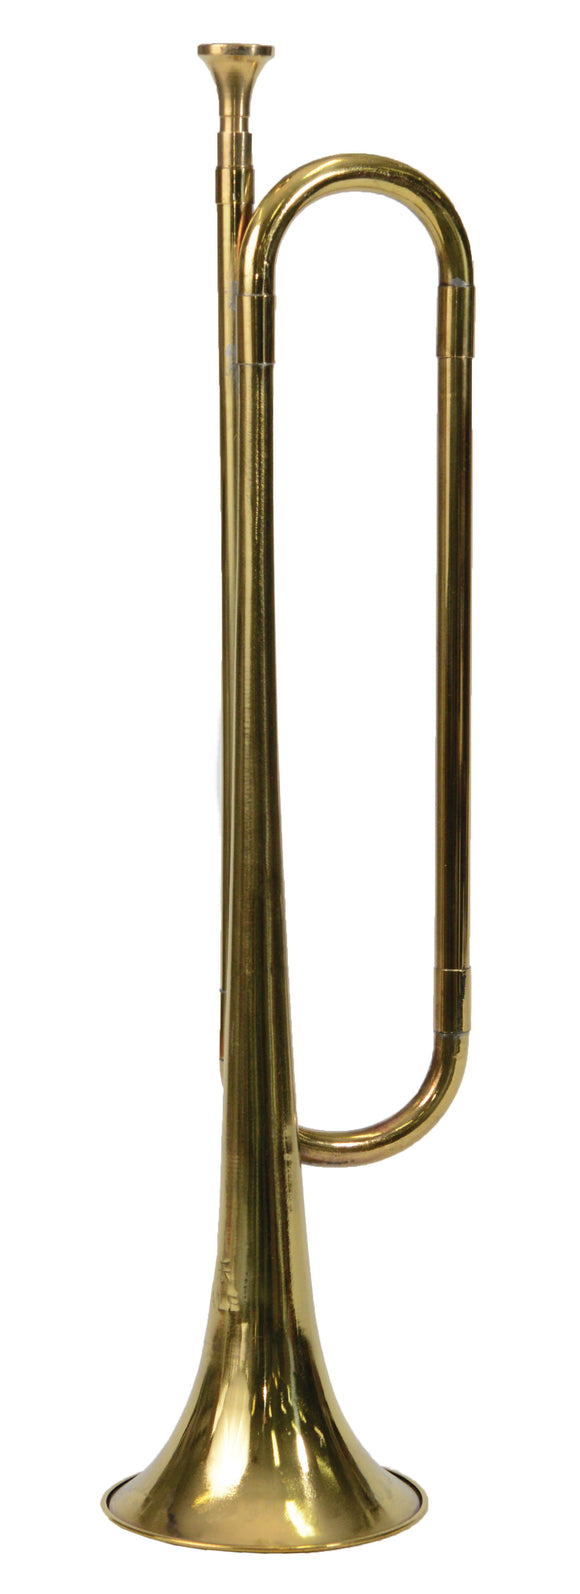 Replica Calvary Brass Bugle – The Outdoor Gear Co.